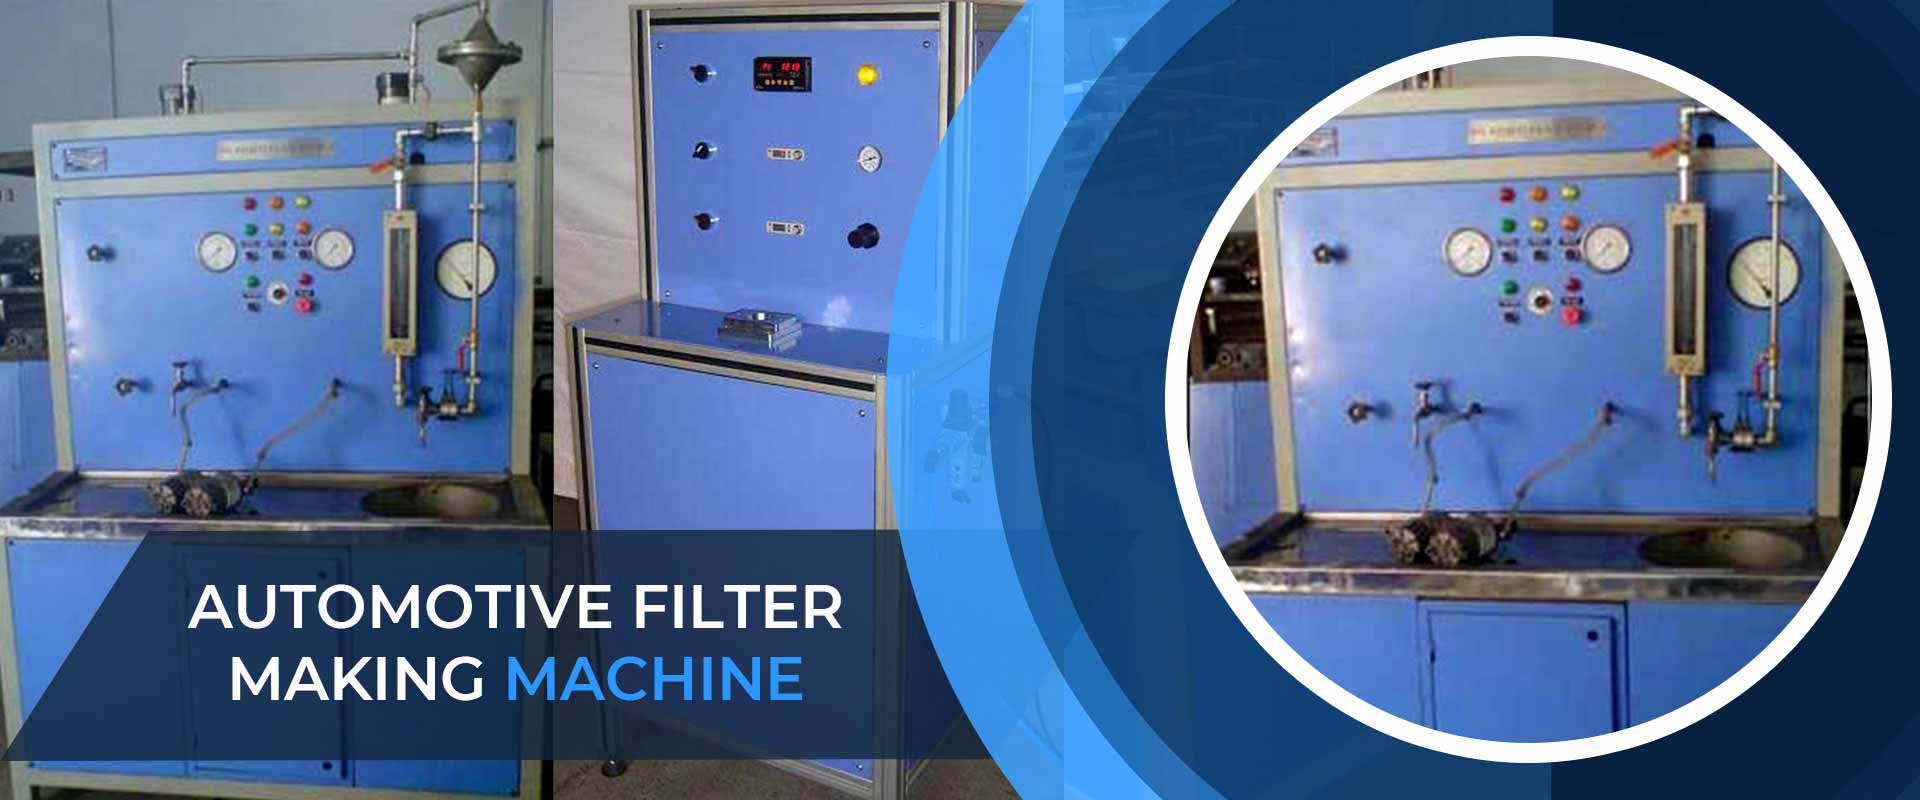 Automotive Filter Making Machine